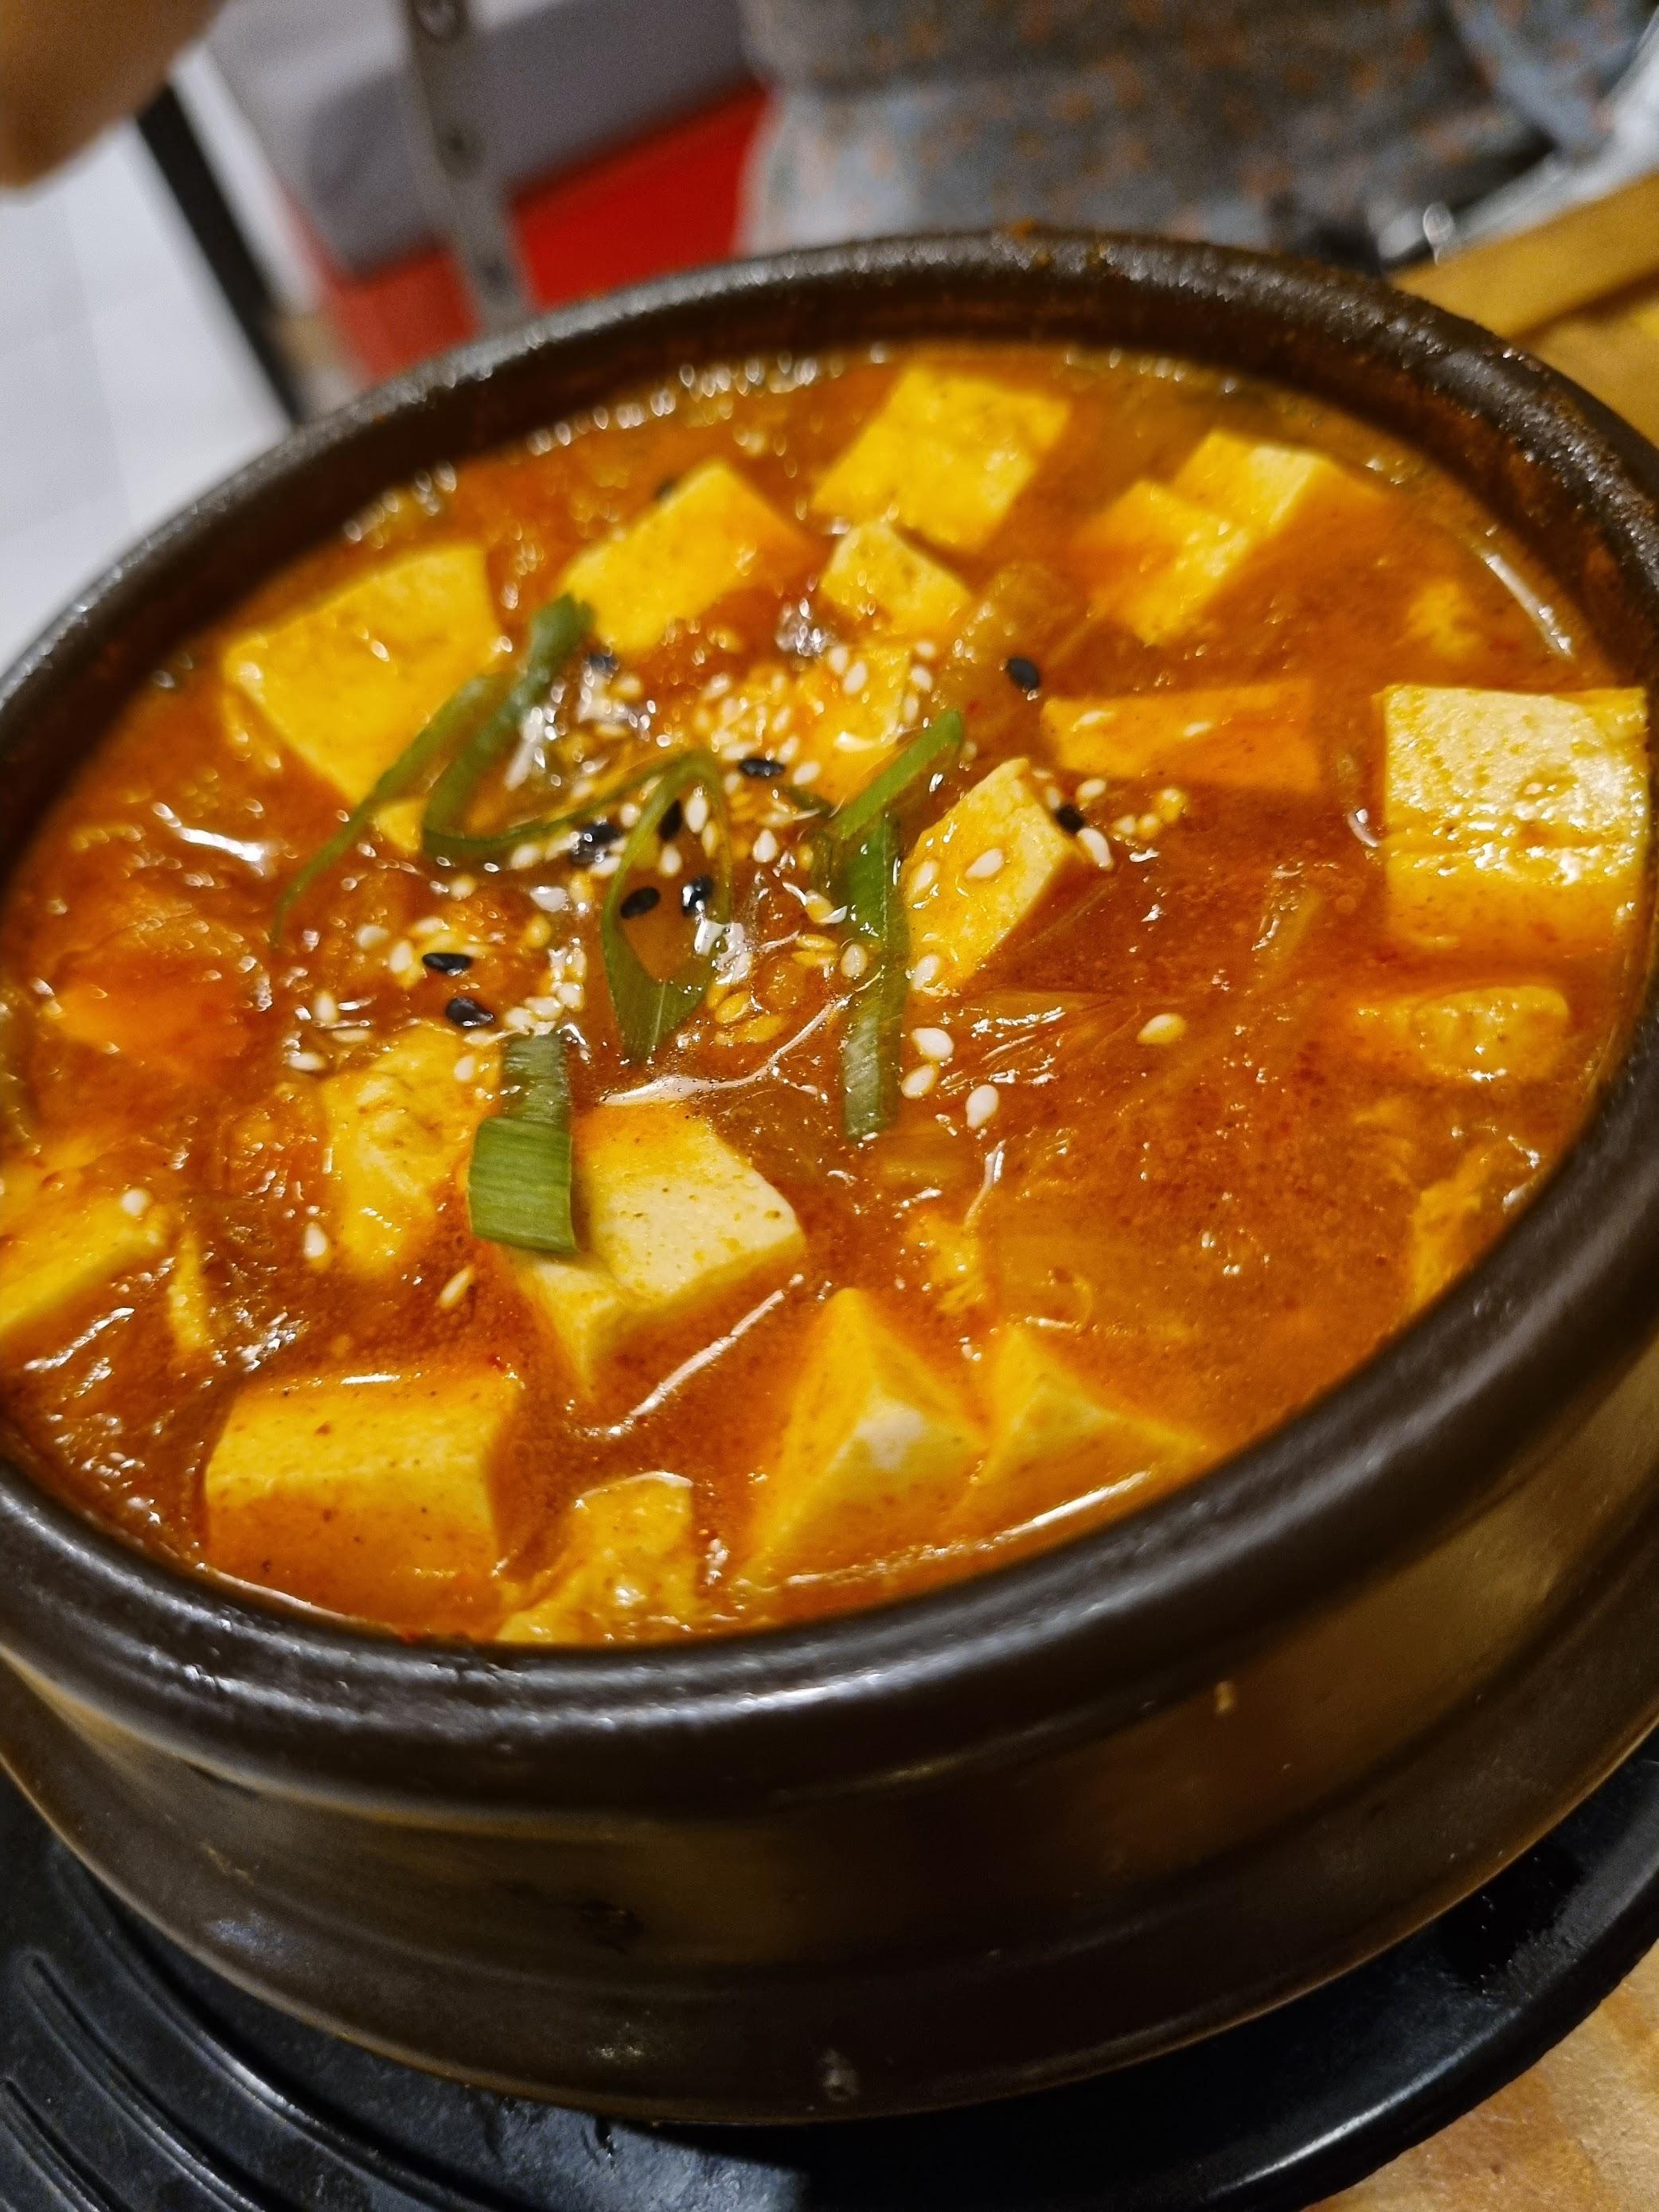 Nami Chikin Korean Street Food review